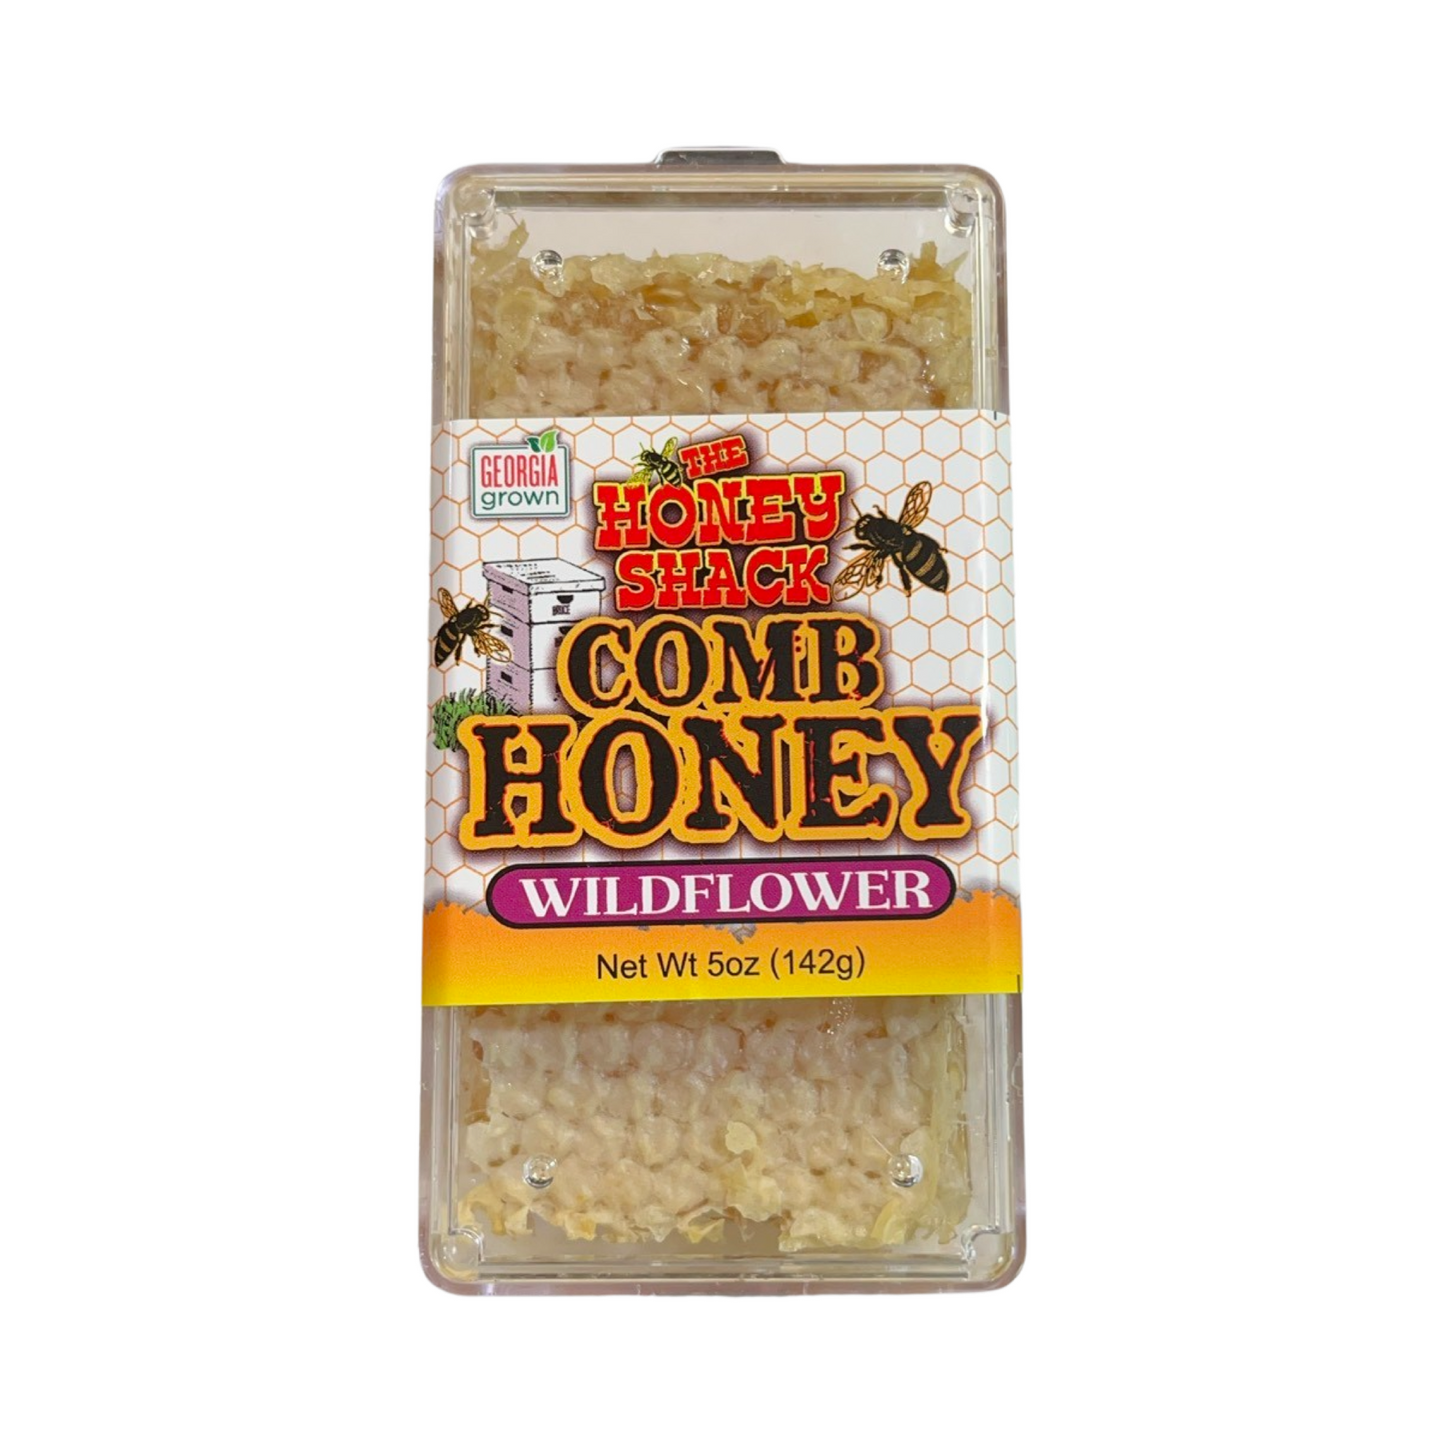 5 Ounce Wildflower Comb Honey